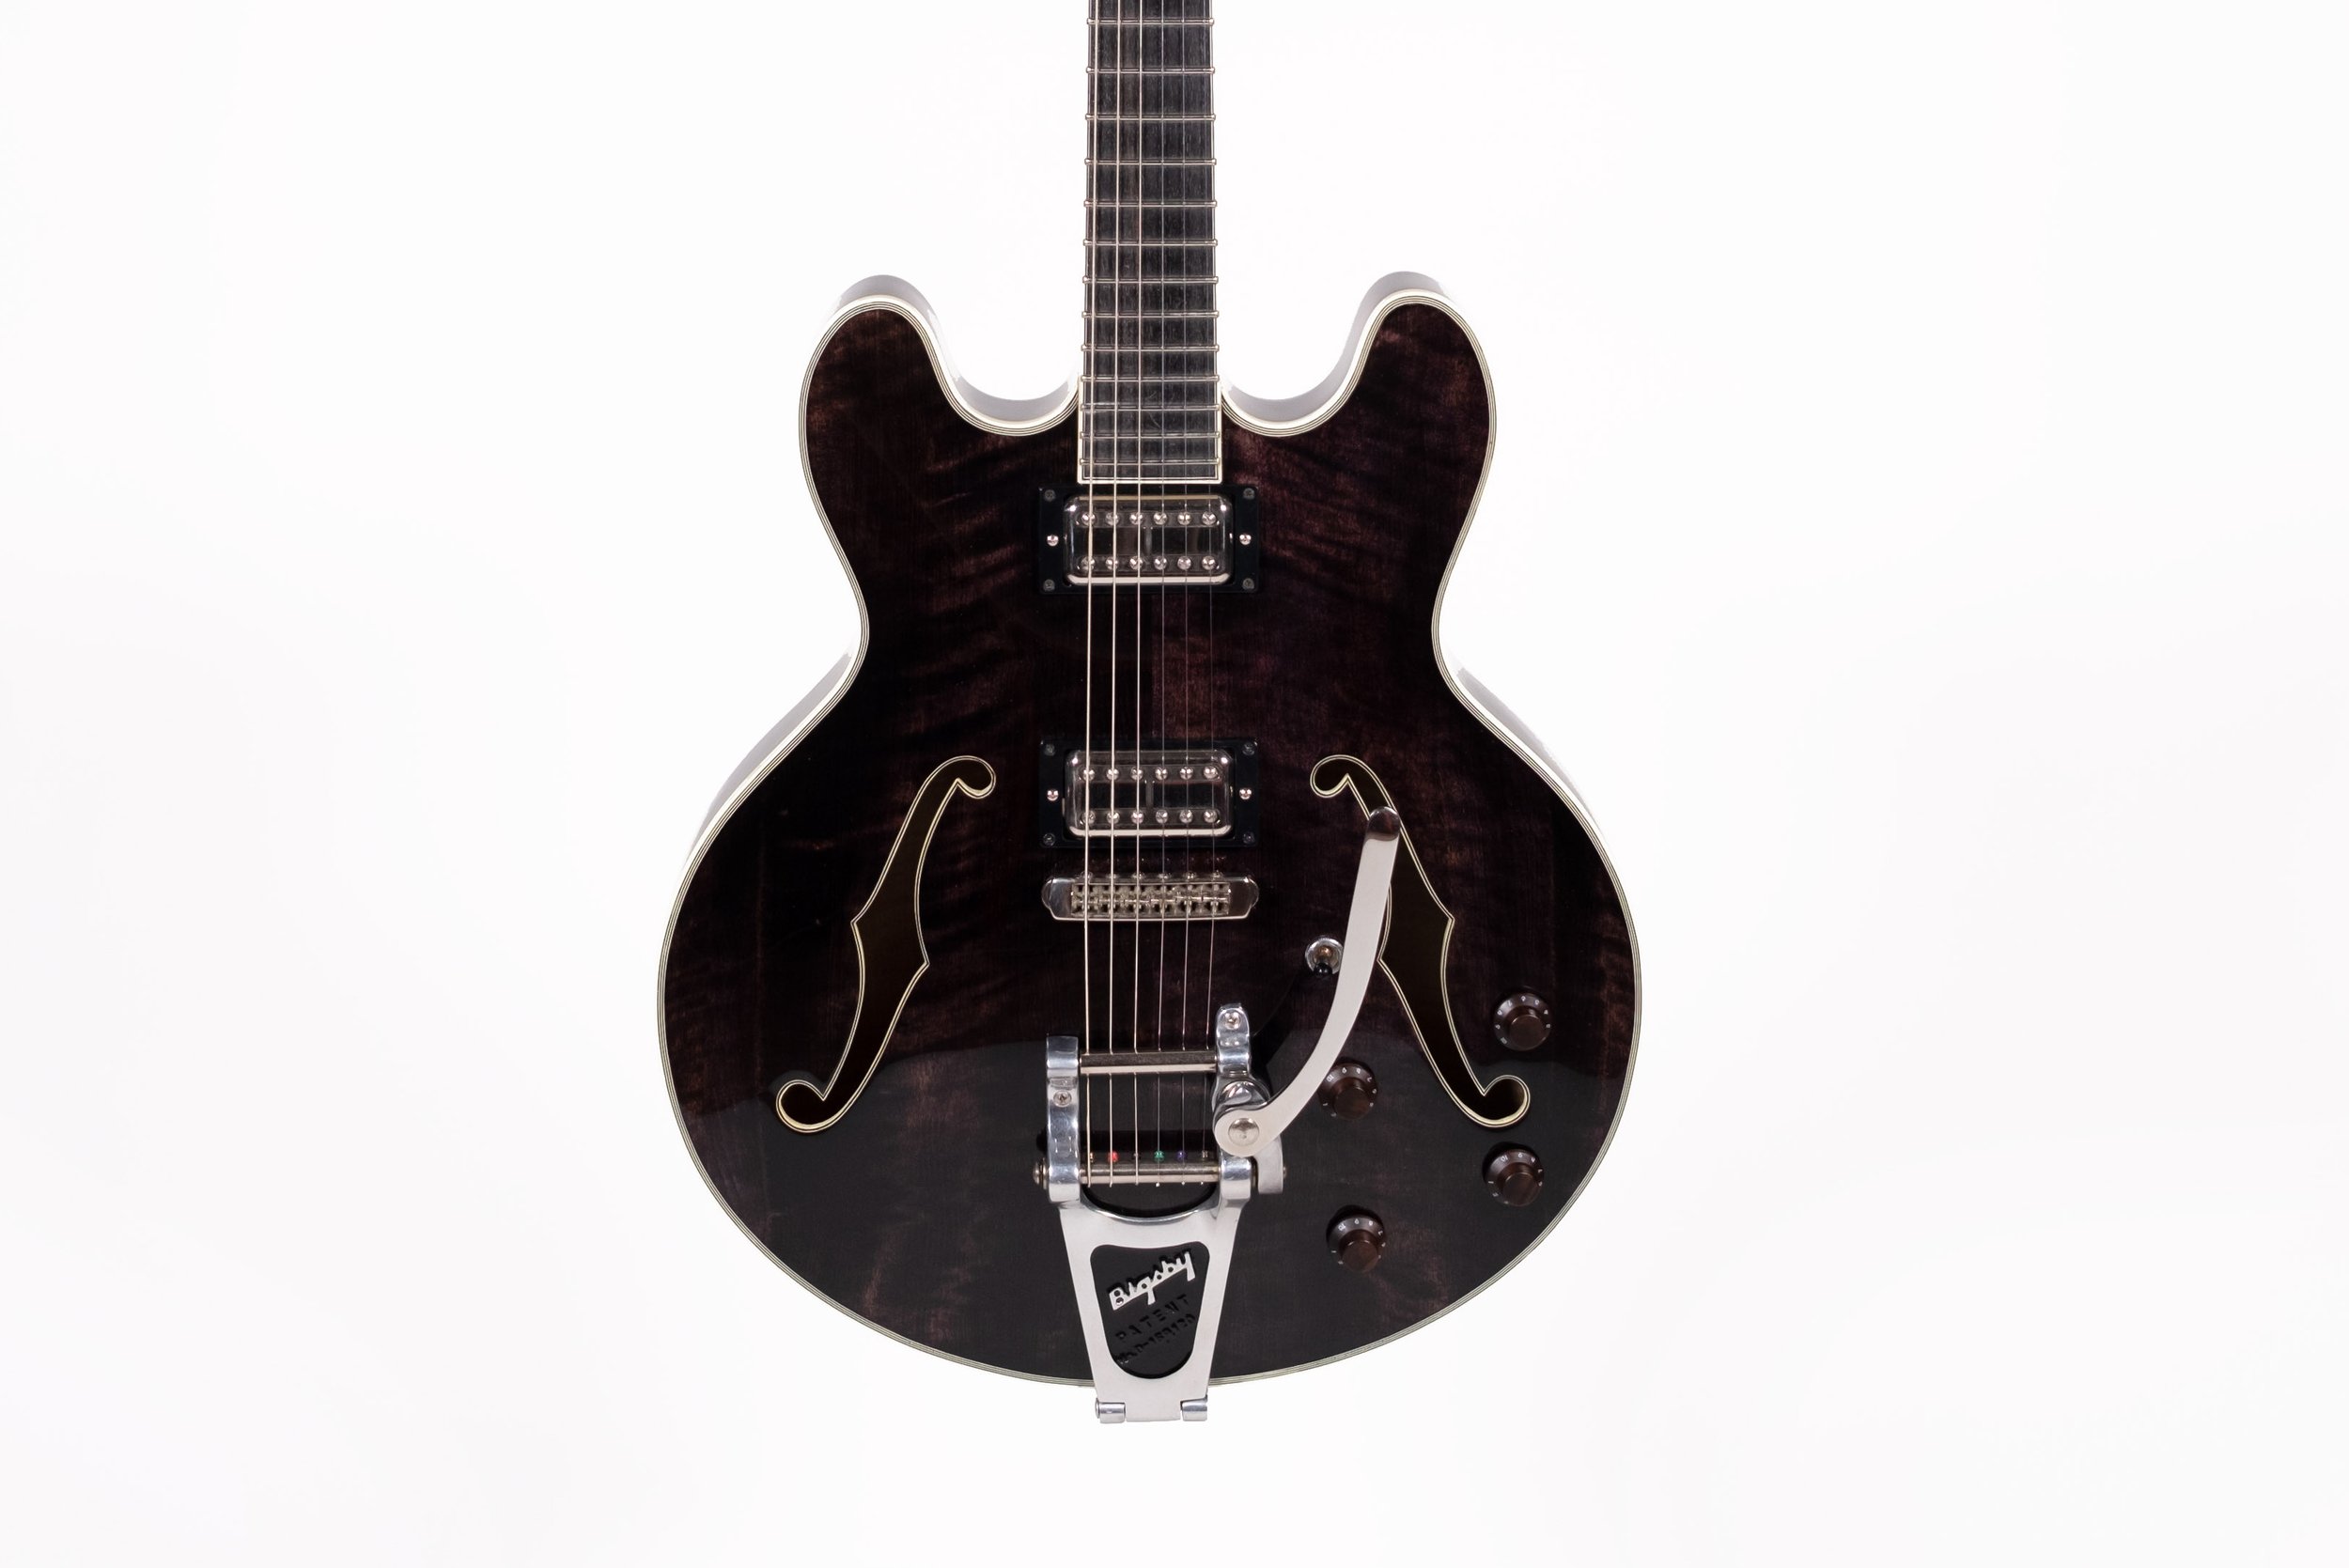 Dejawu Guitars - hand carved semi acoustic guitar, black transparent